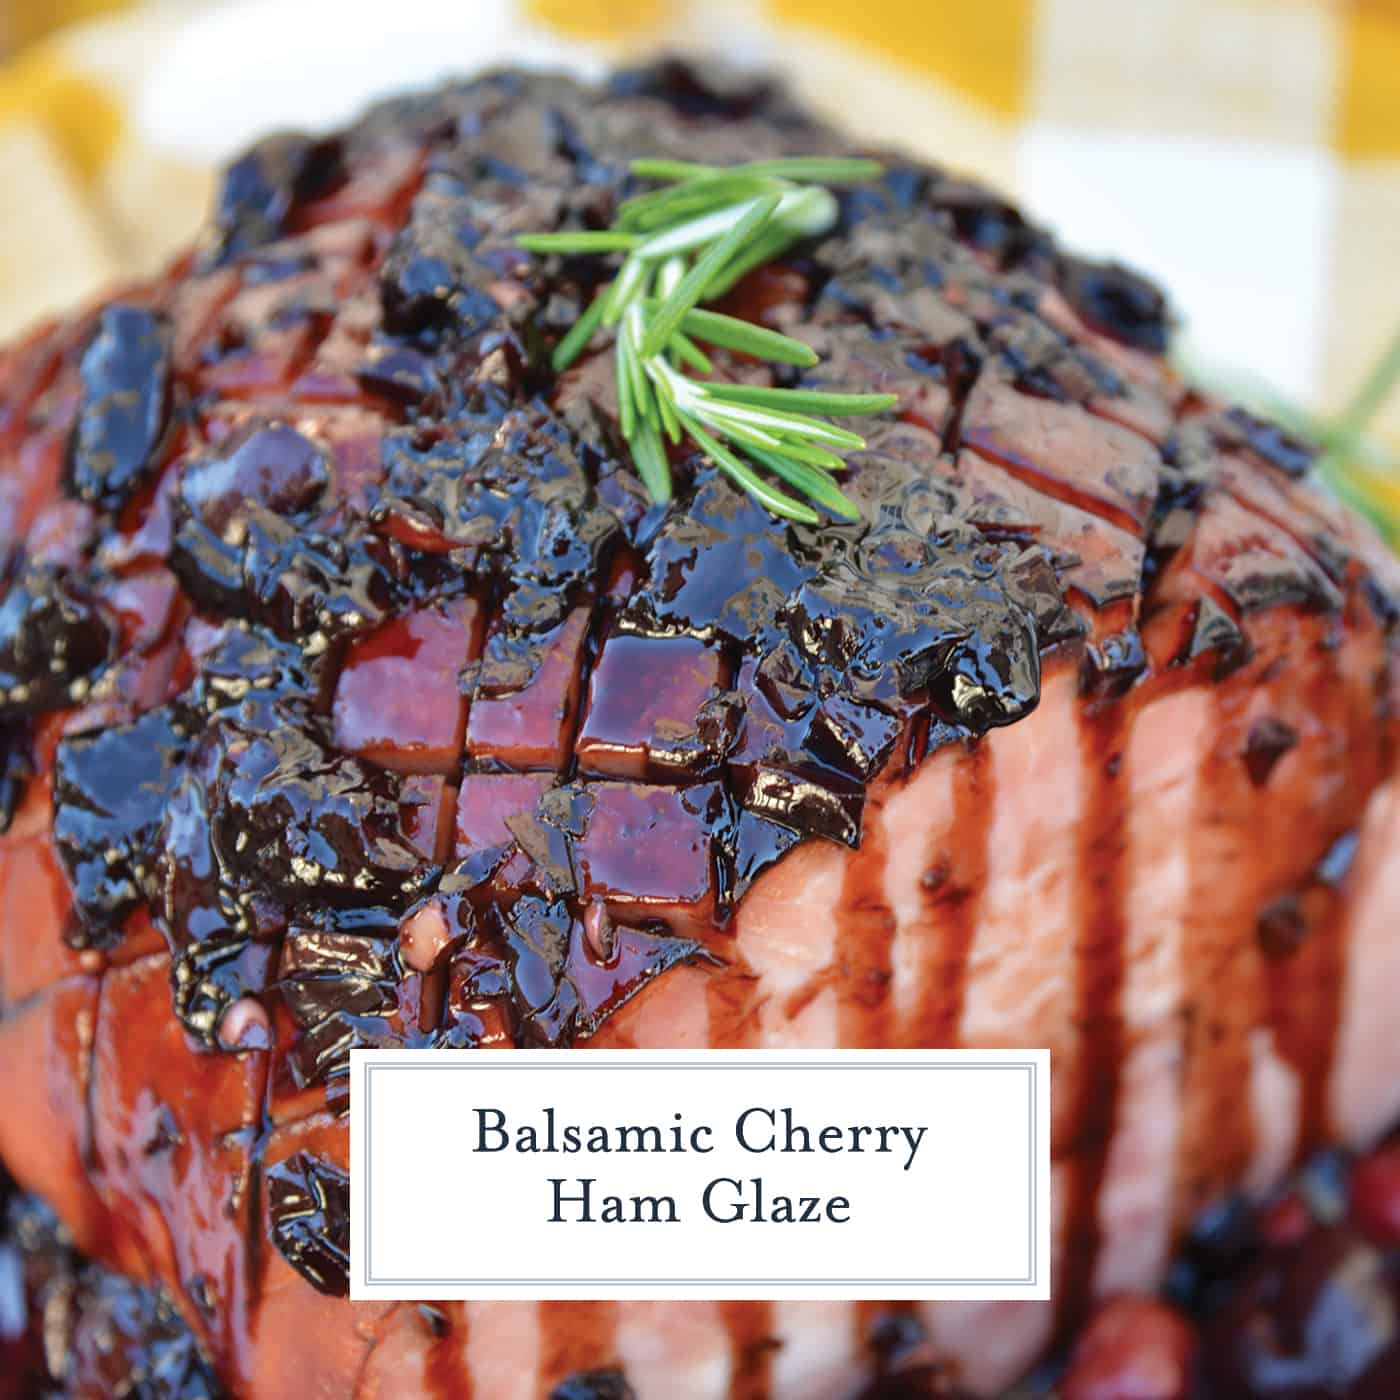 Balsamic Cherry Ham Glaze is an easy ham glaze for your Christmas ham or any baked ham throughout the year. Tart cherries, balsamic vinegar and brown sugar lend bold flavors. #hamglaze #christmasham #hamrecipe www.savoryexperiments.com 